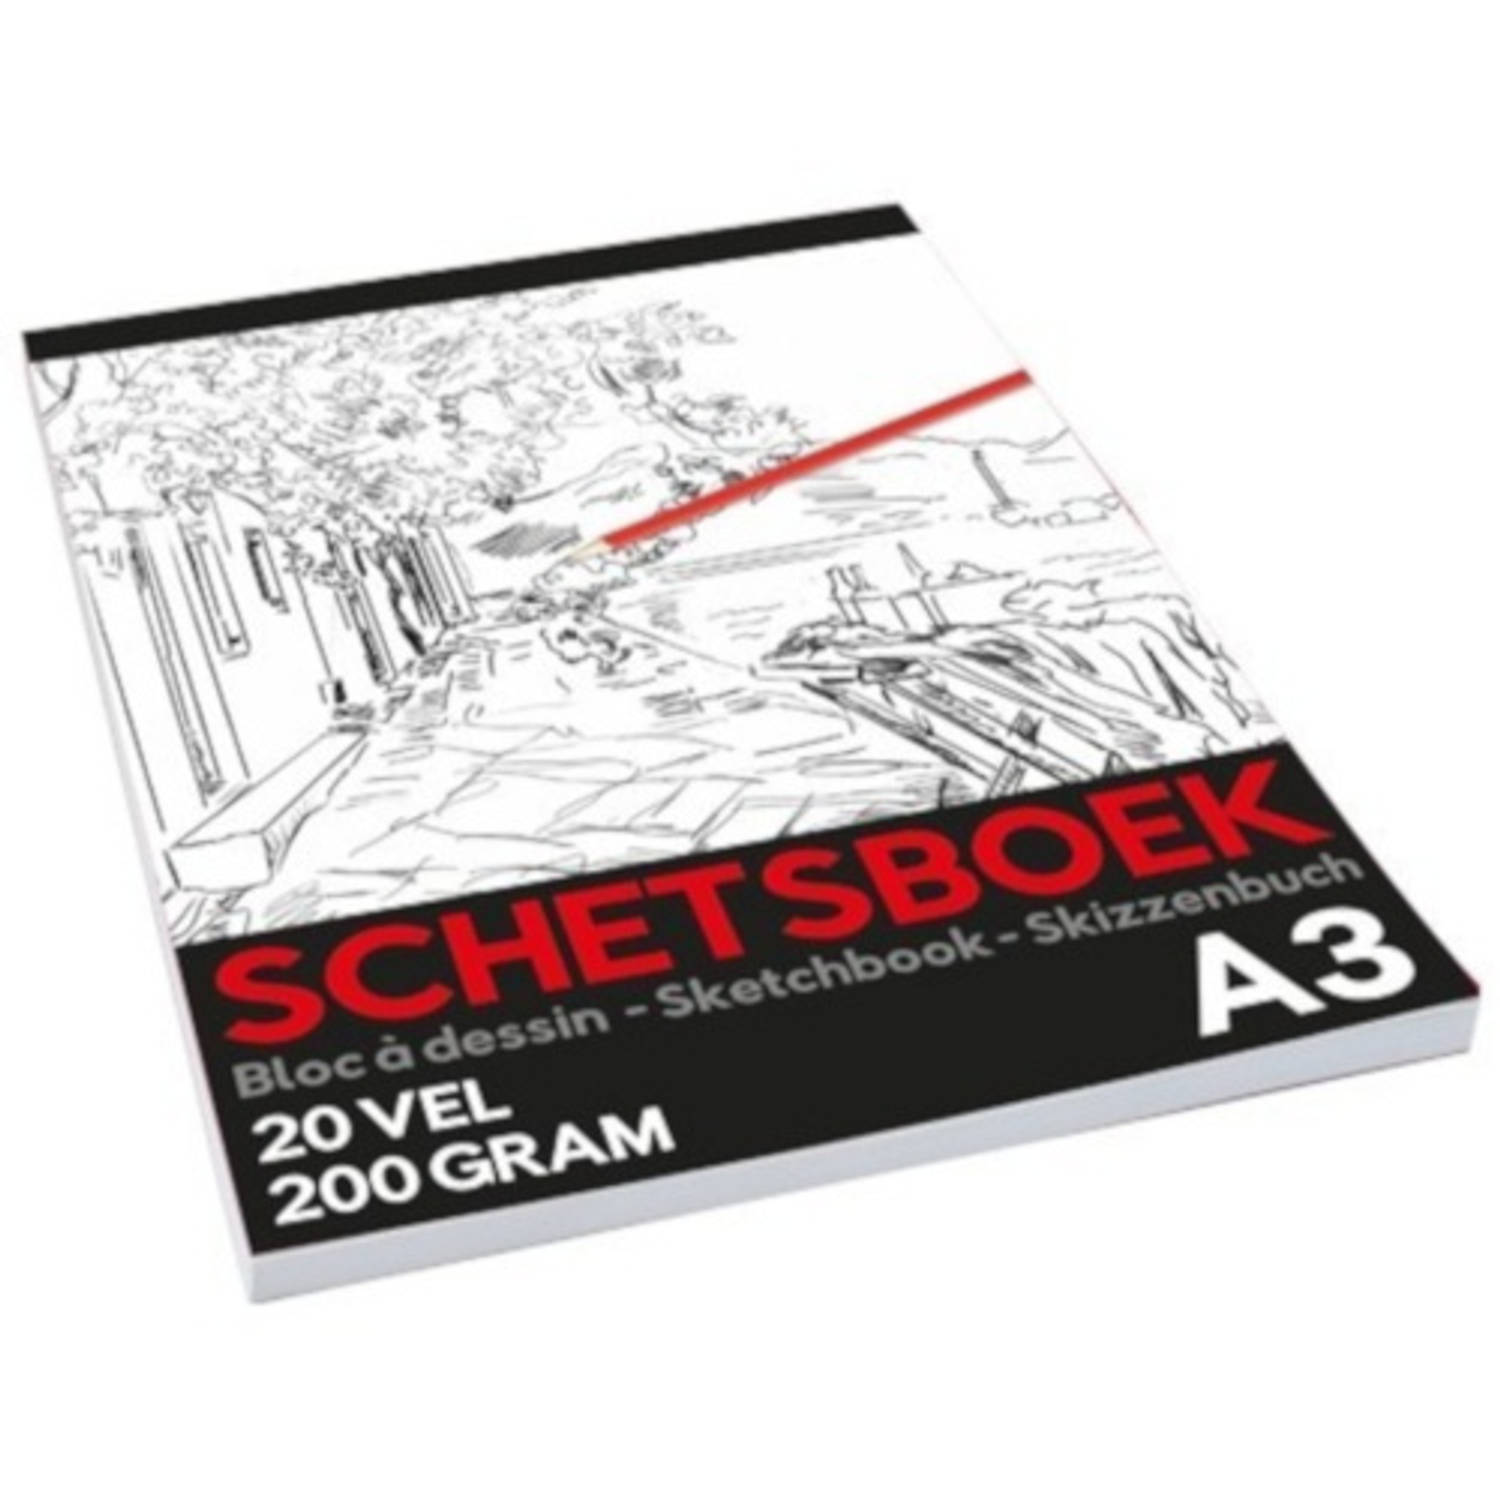 Non-branded Schetsboek Pro Junior A3 Papier Wit 20 Vellen